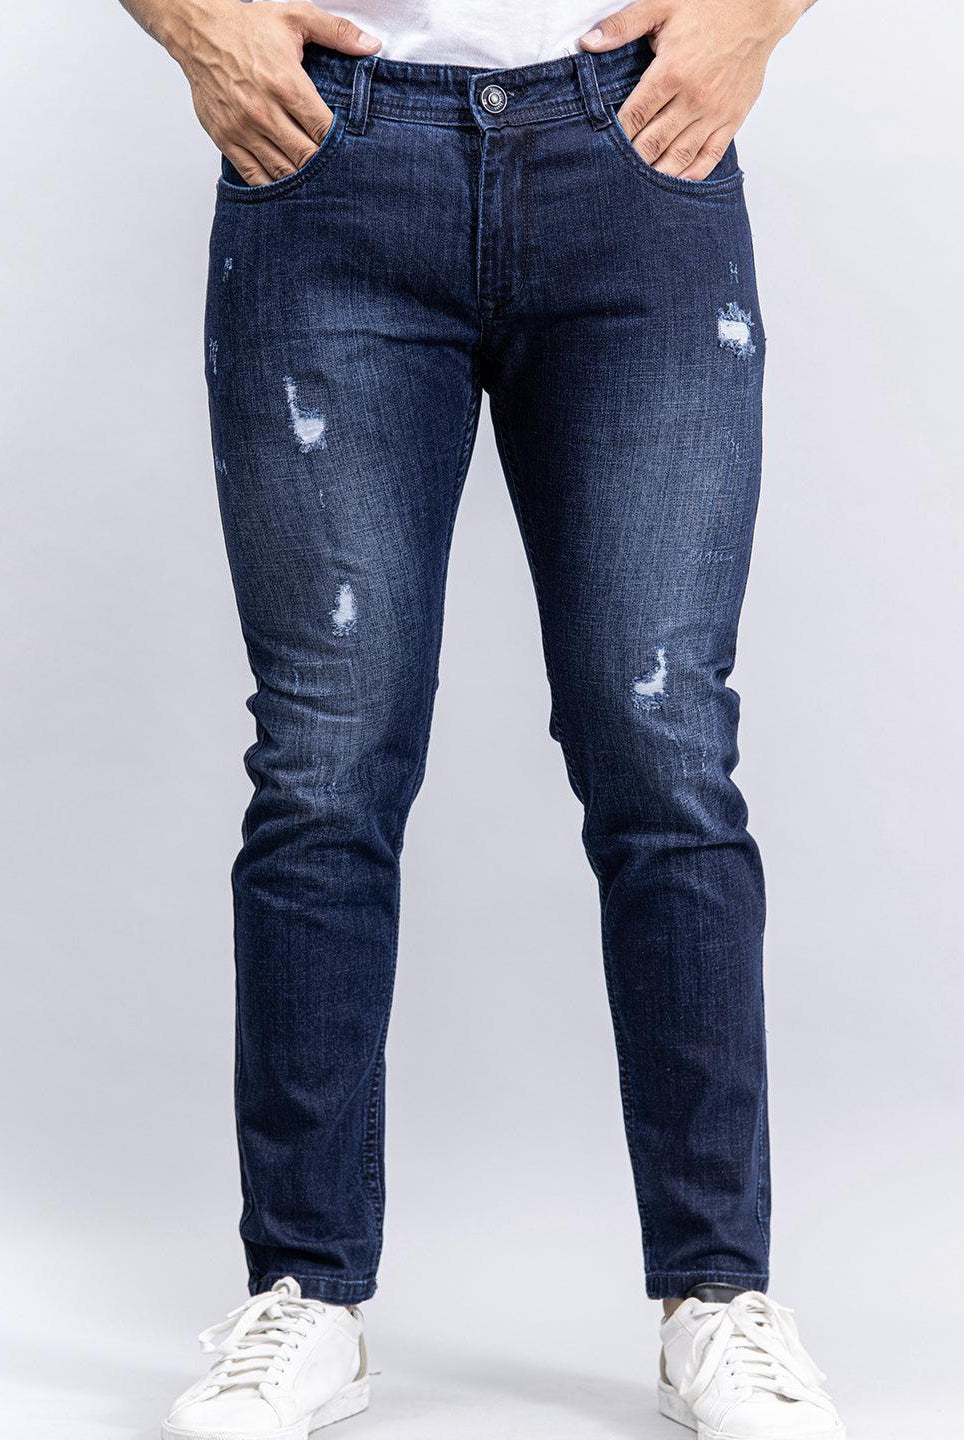 navy blue denim ankle length stretchable mens jeans